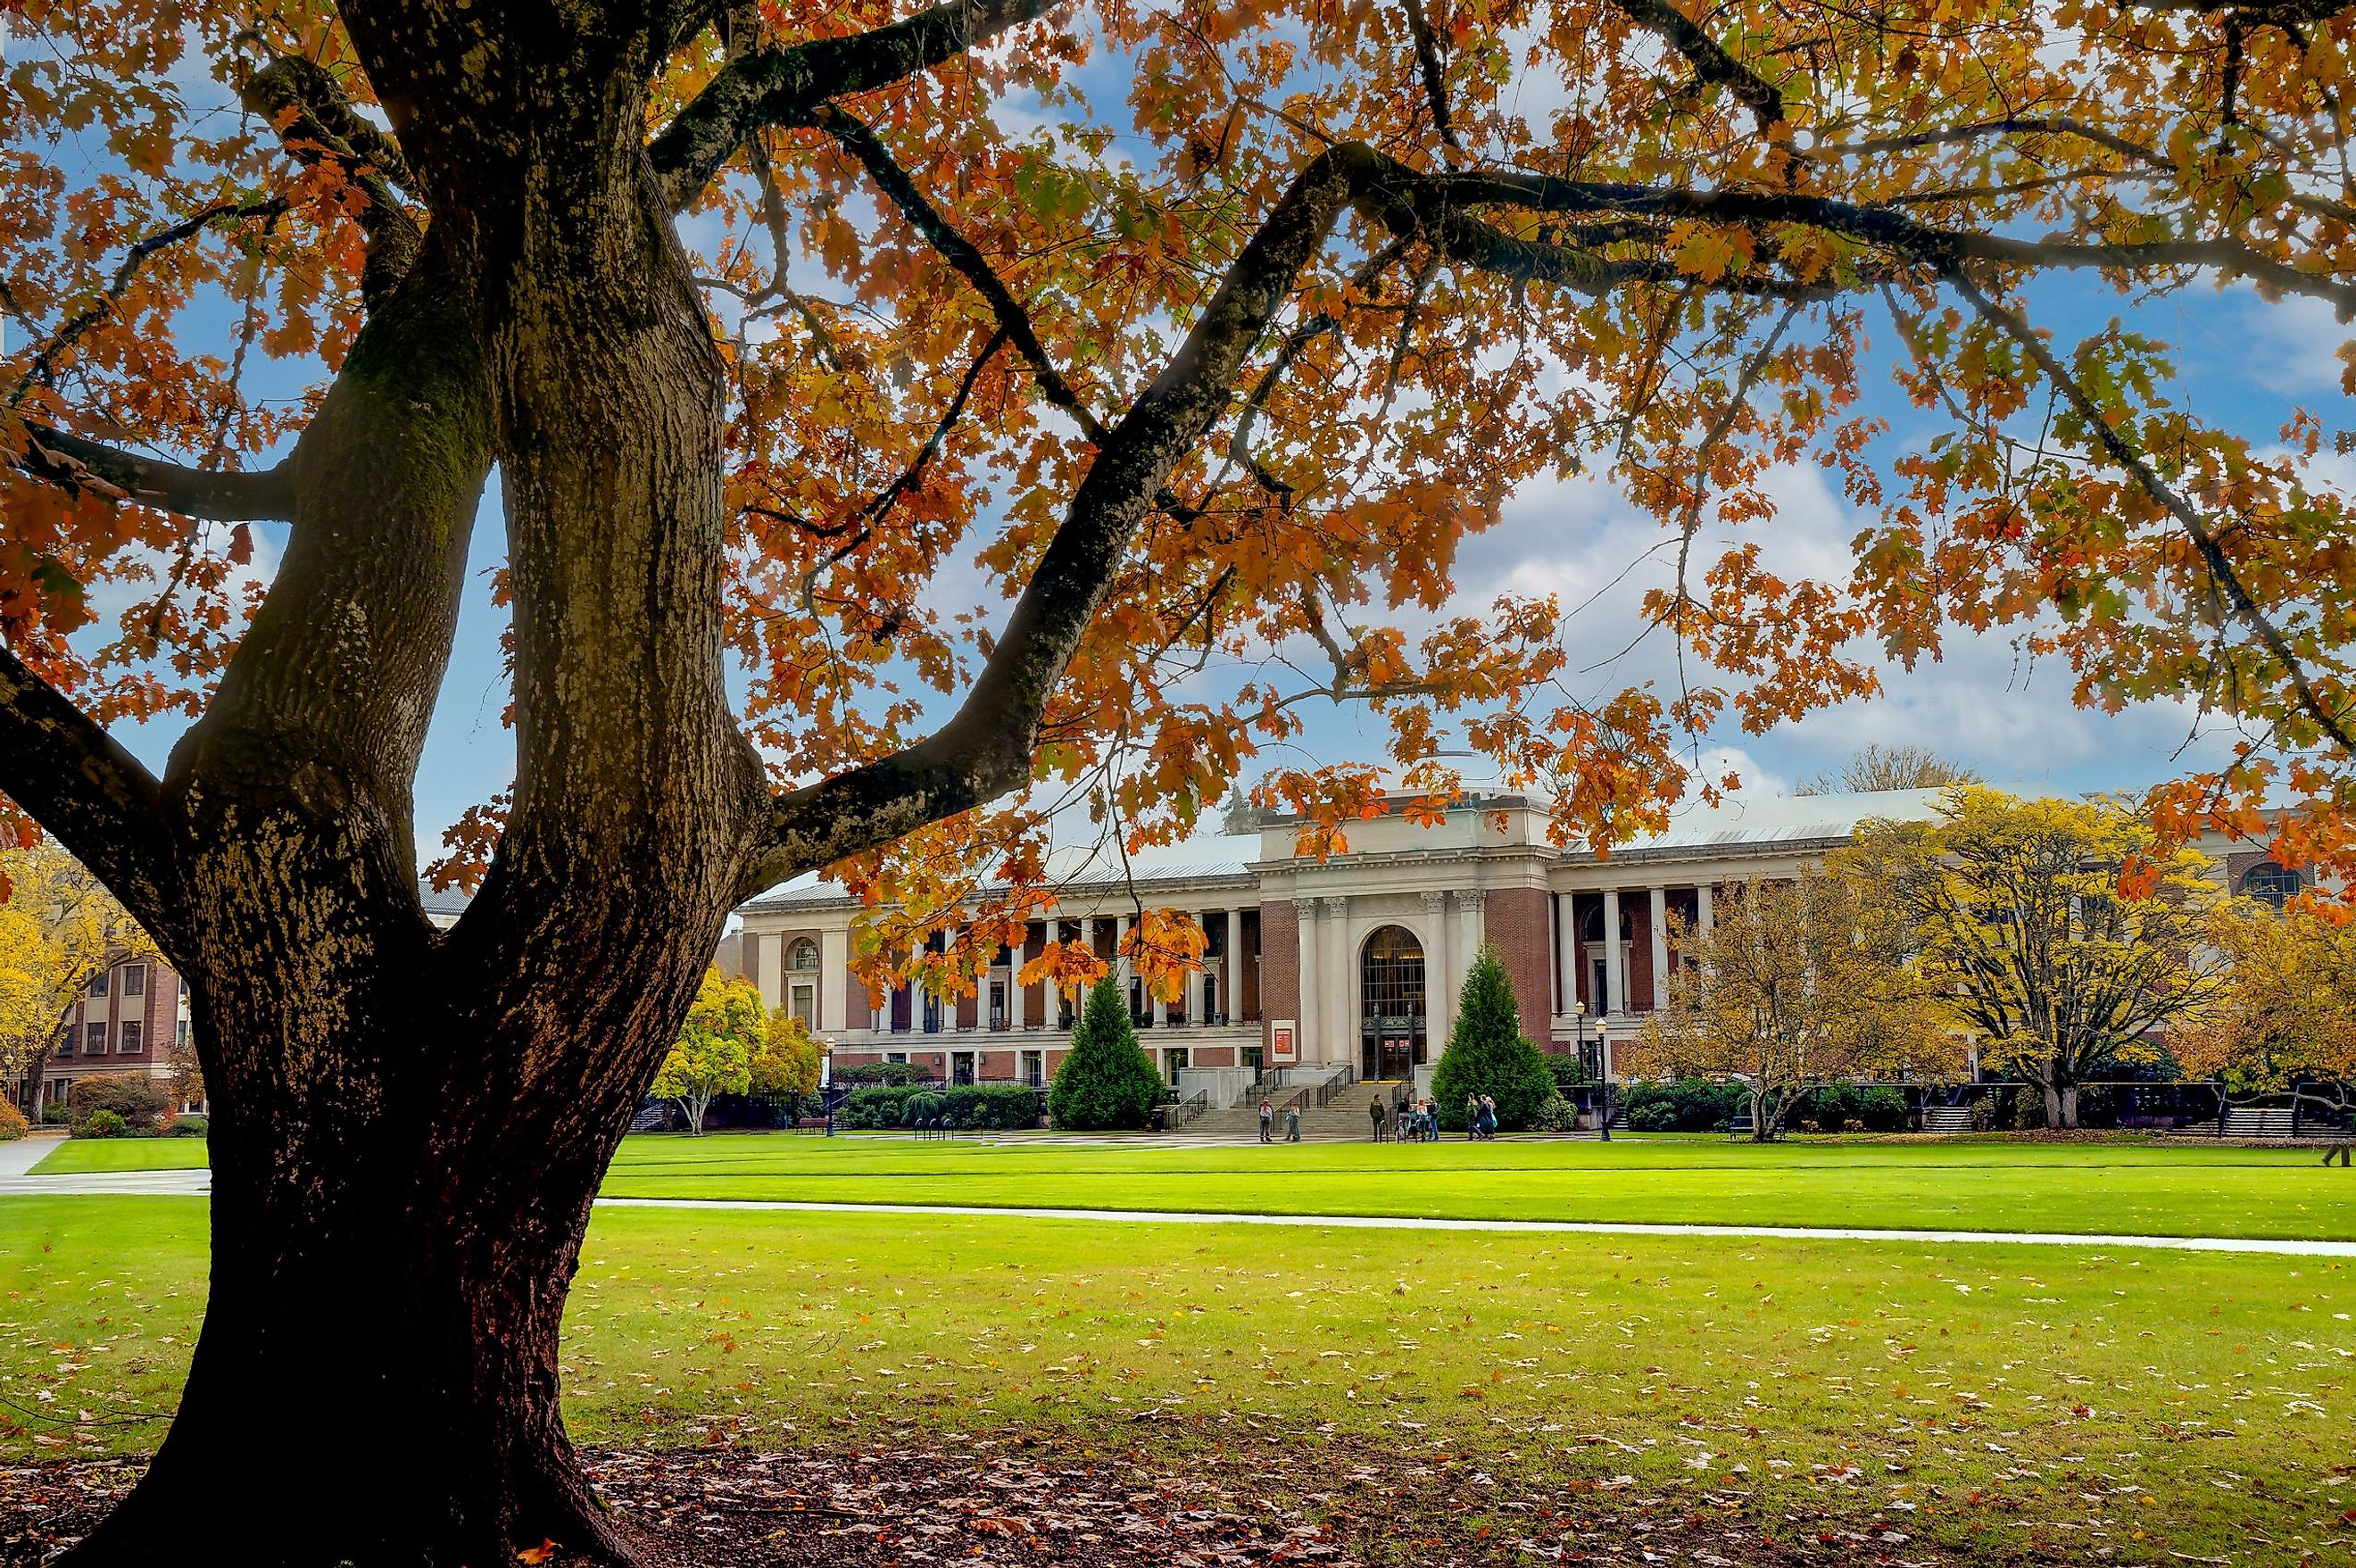 College campus of the Oregon State University in Corvallis, Oregon.